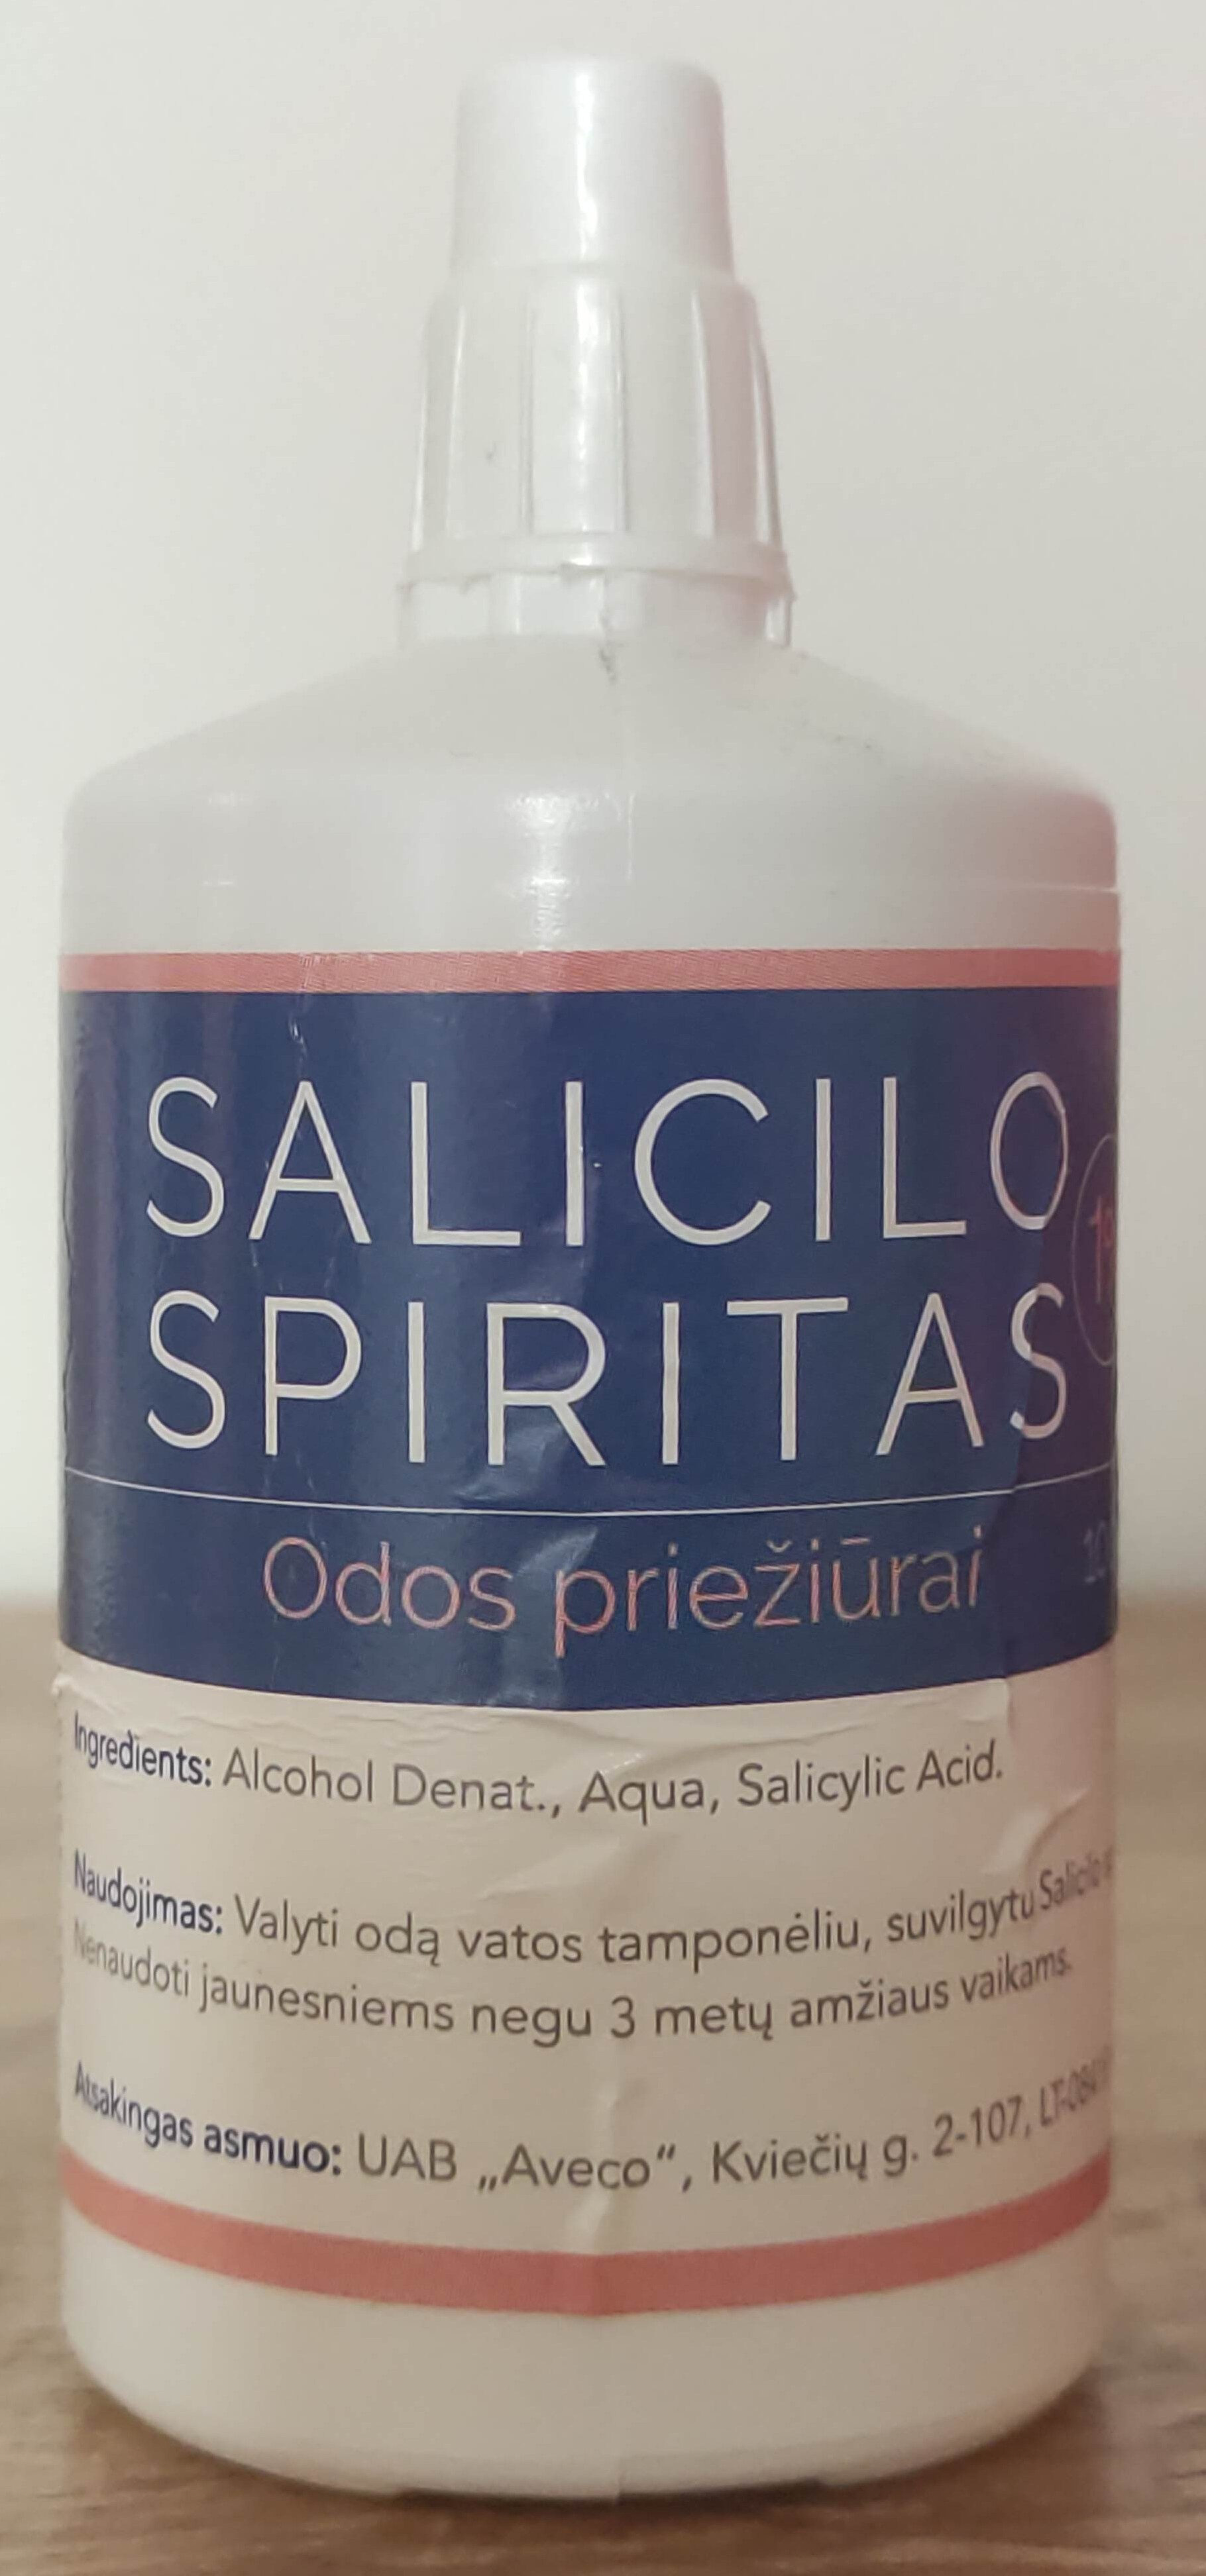 Salicilo spiritas - نتاج - lt